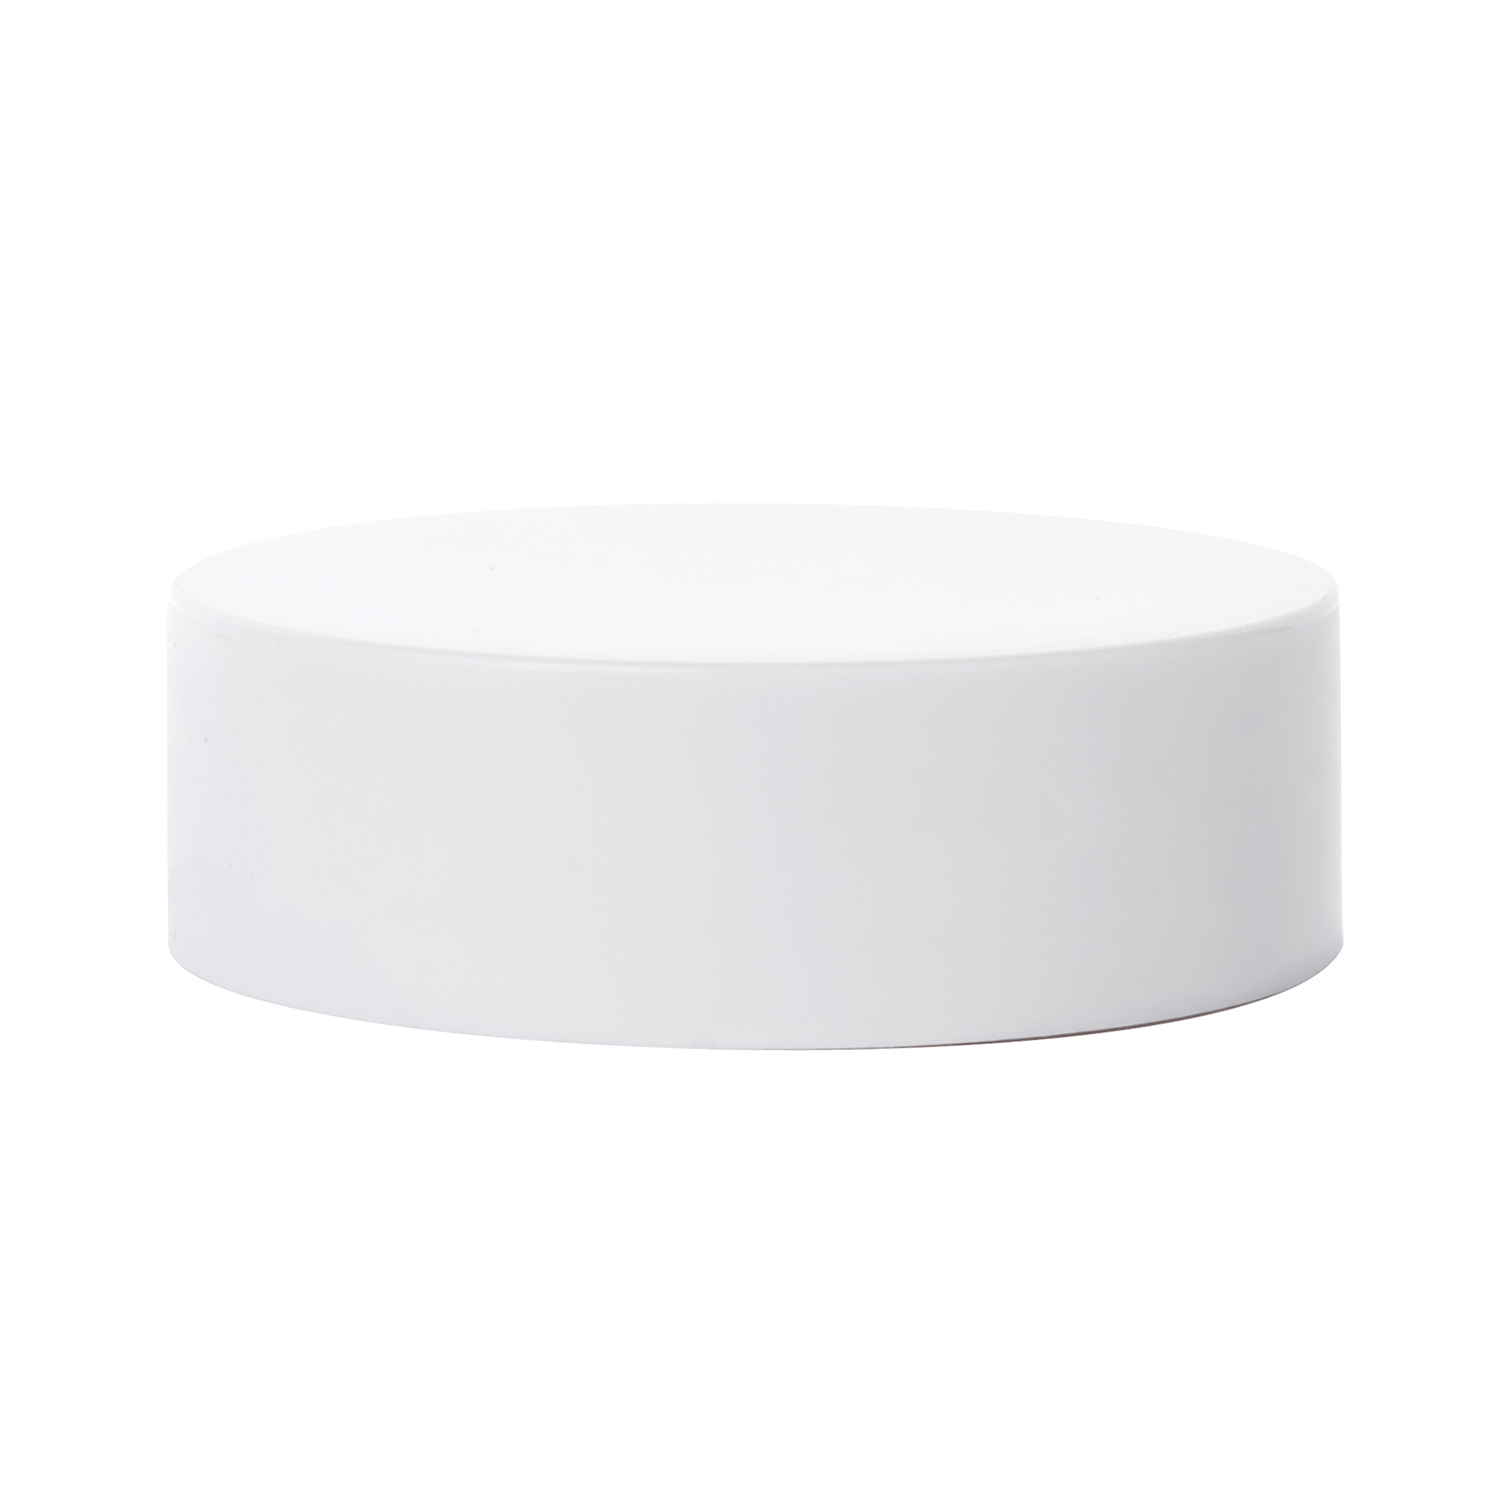 60g Hollowed Cream Jar Cosmetic Jar For Skincare